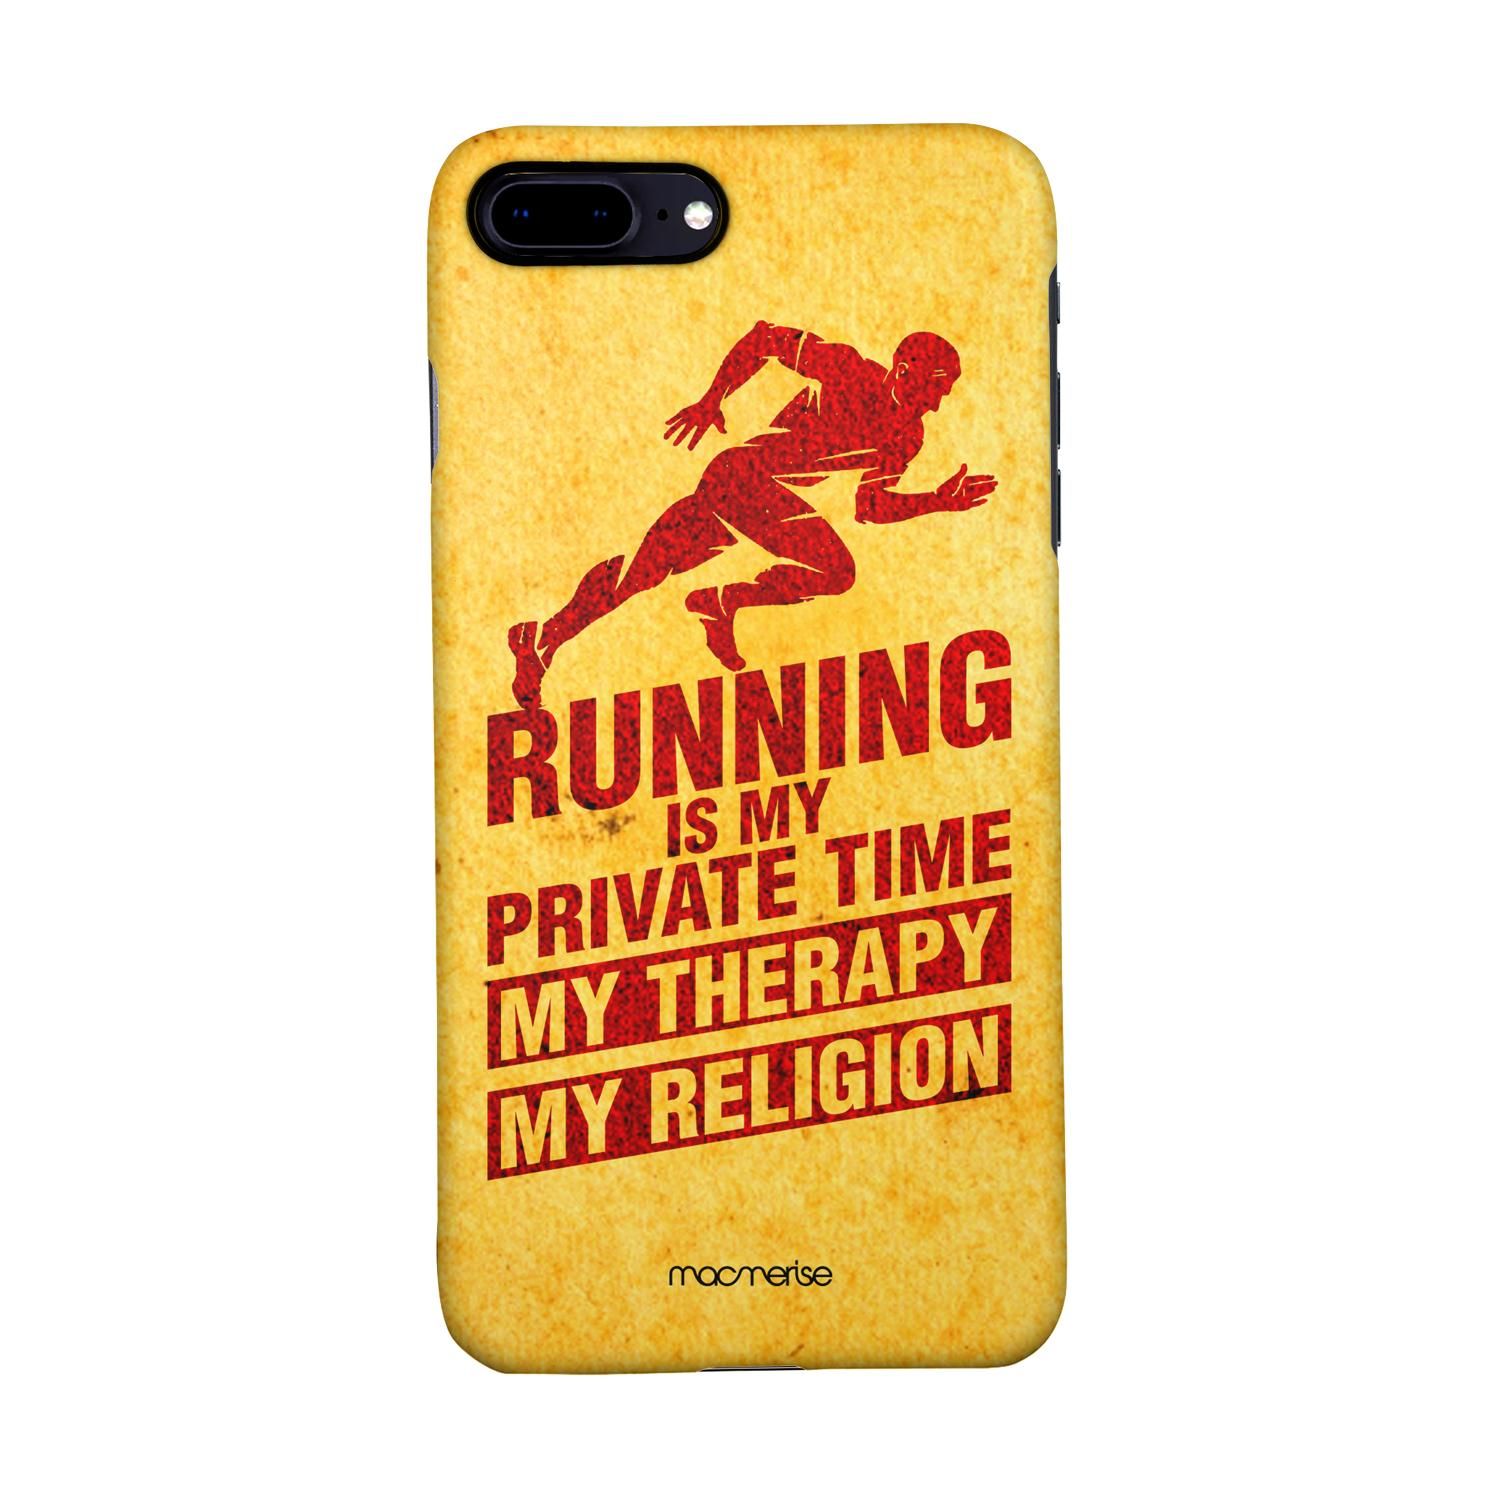 Buy Religion Of Running - Sleek Phone Case for iPhone 8 Plus Online